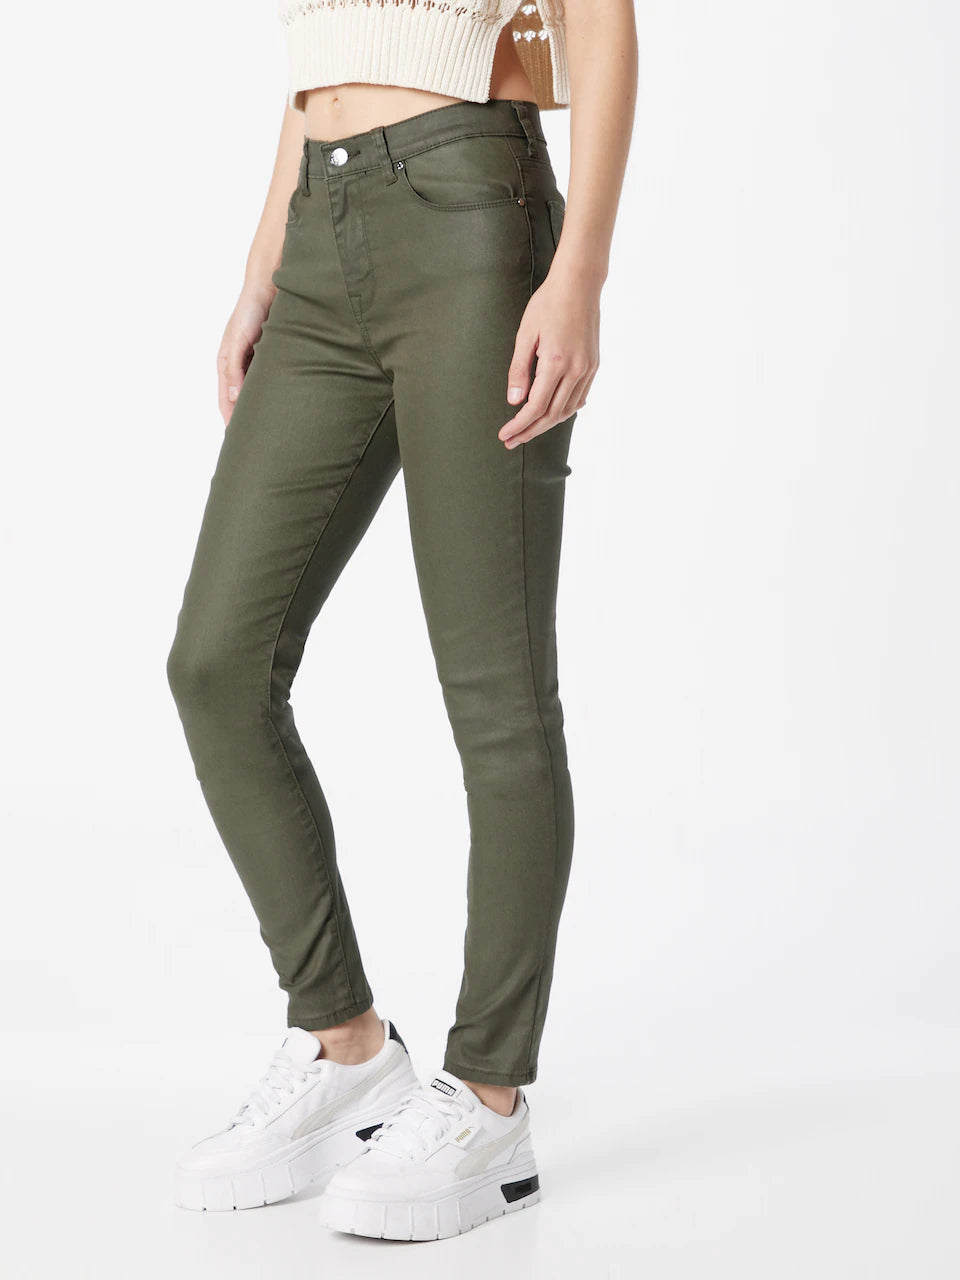 Grunt Green Overdyed Skinny Fit Jeans, GRDJ-103